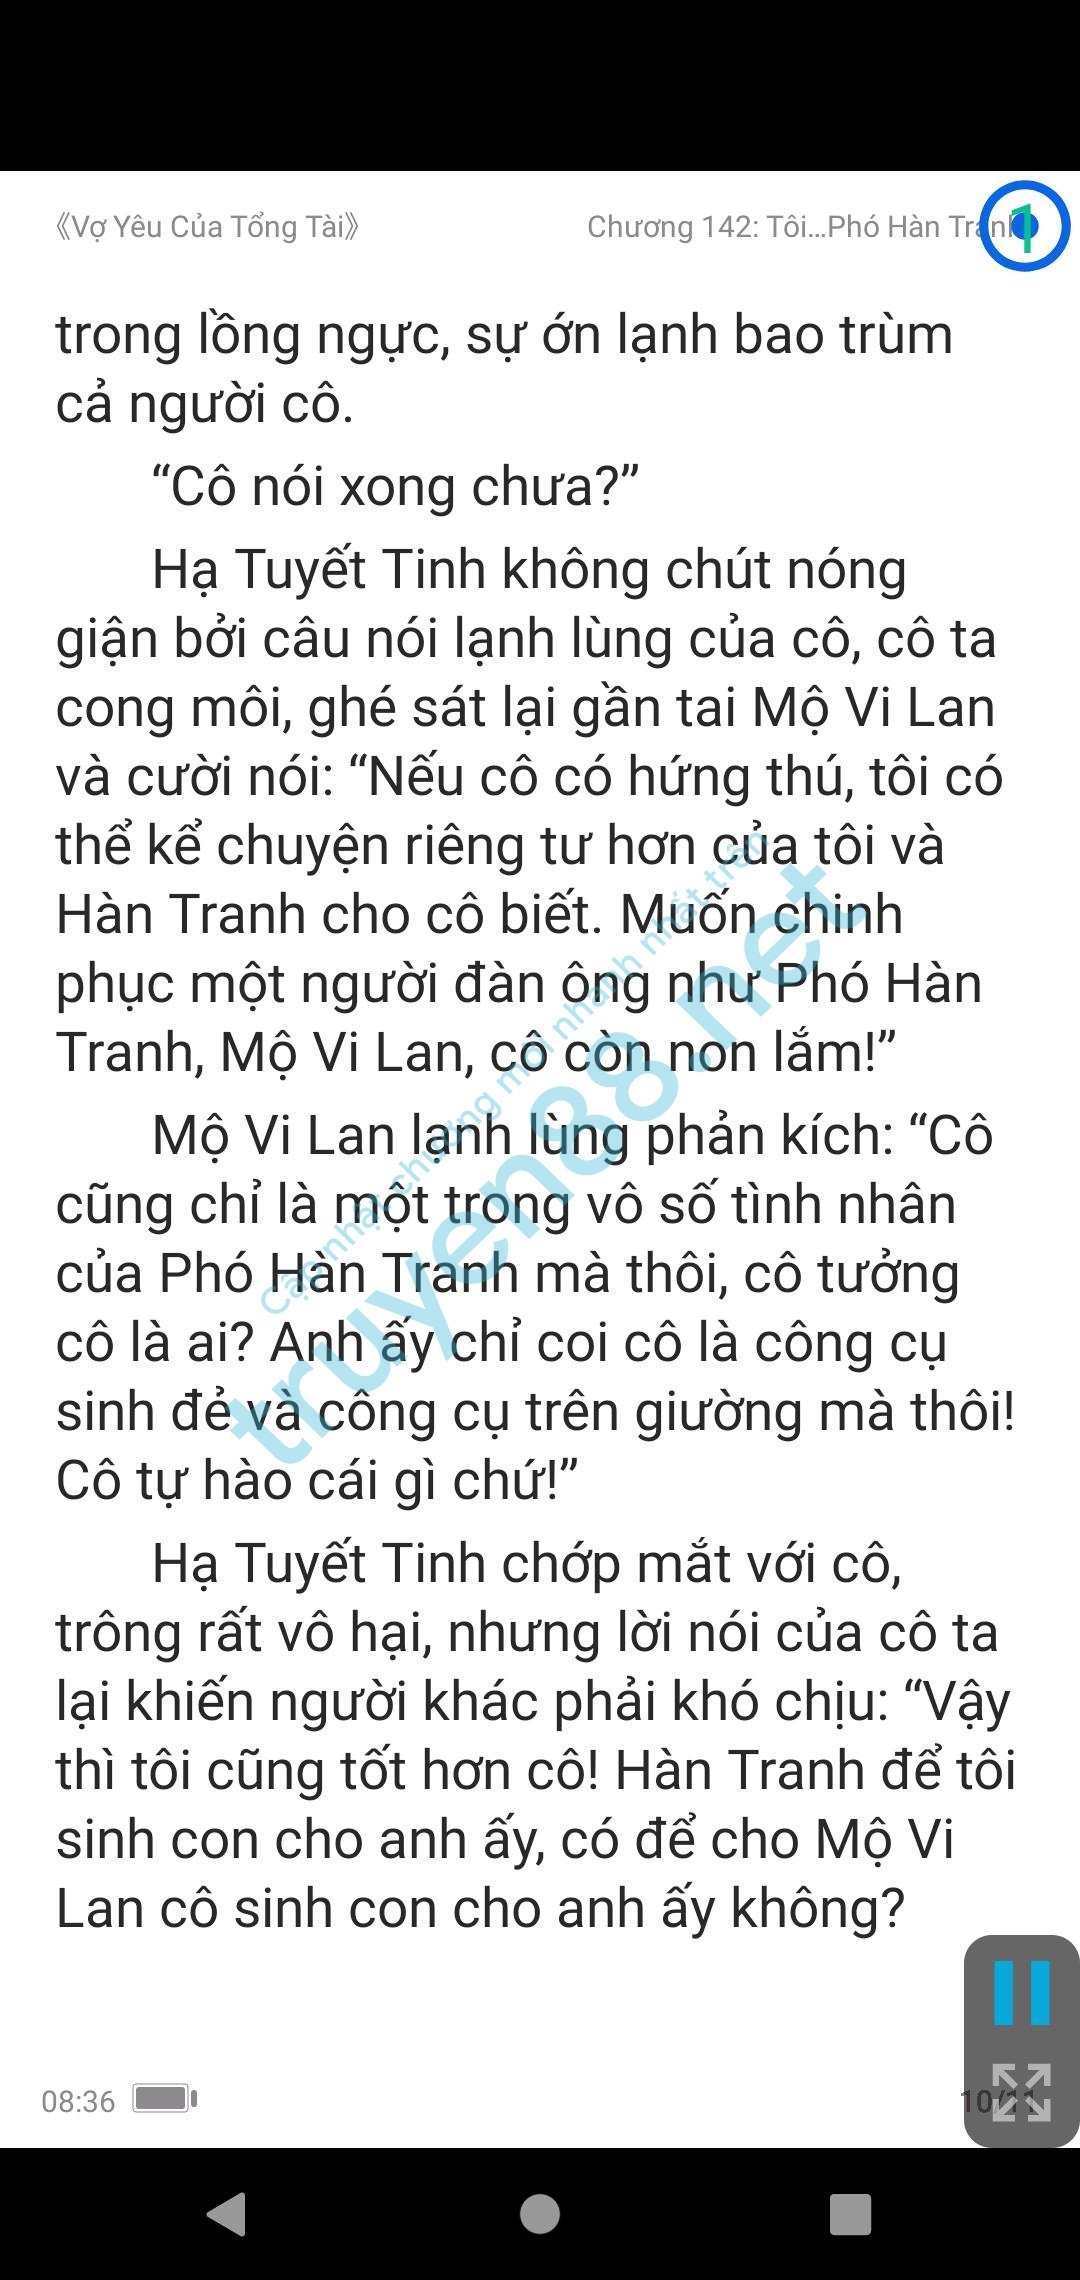 vo-yeu-cua-tong-tai-mo-vi-lan--pho-han-tranh-142-2